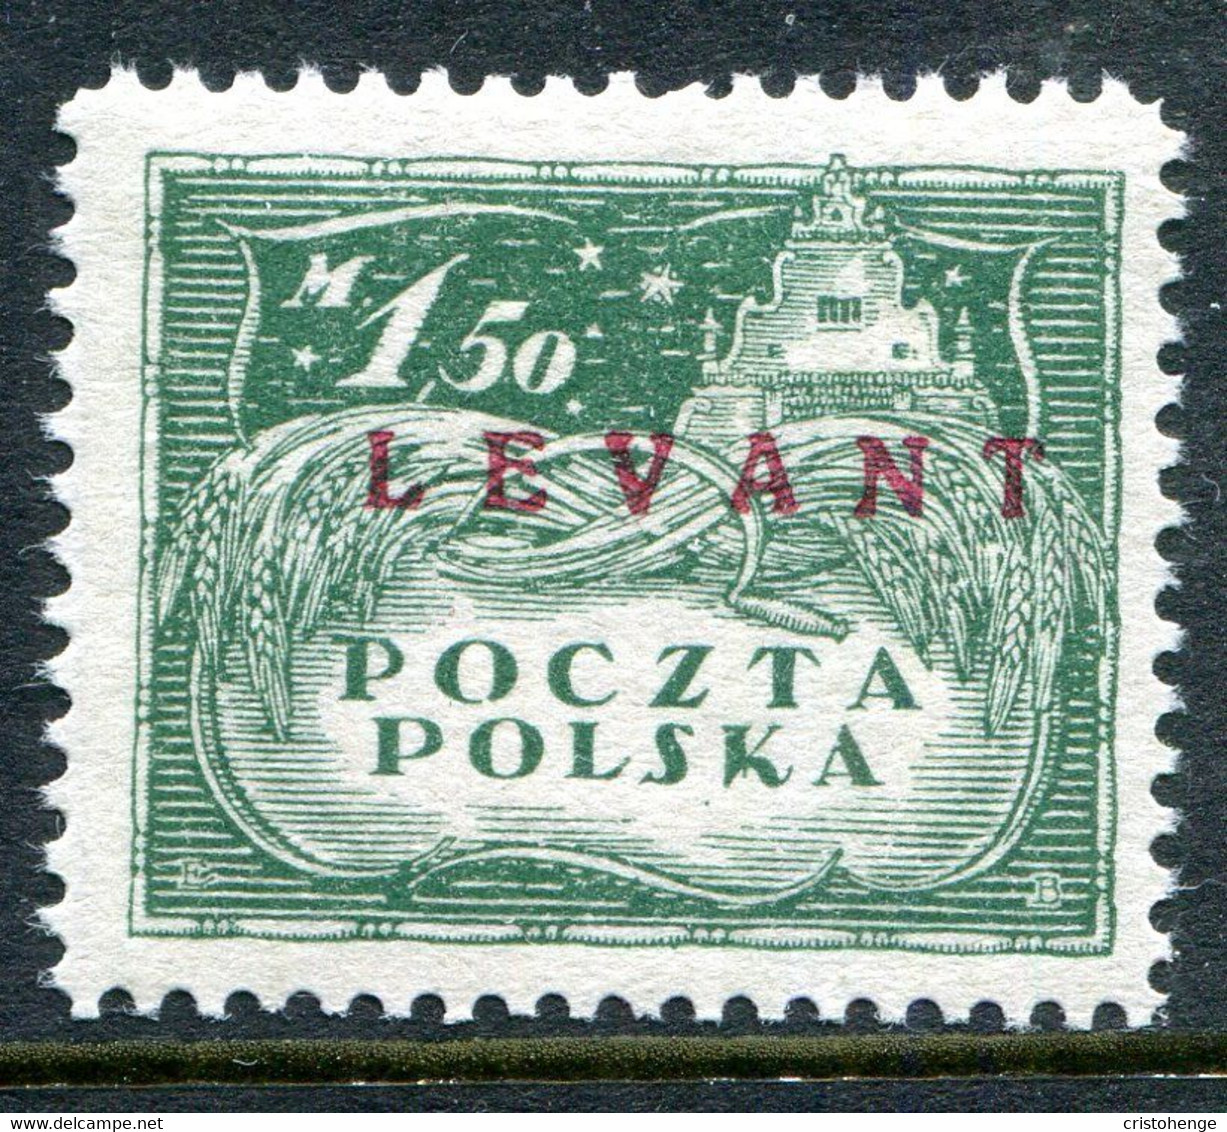 Poland Levant 1919 Overprints - 1.50m Green HM (SG 9) - Levant (Turkije)